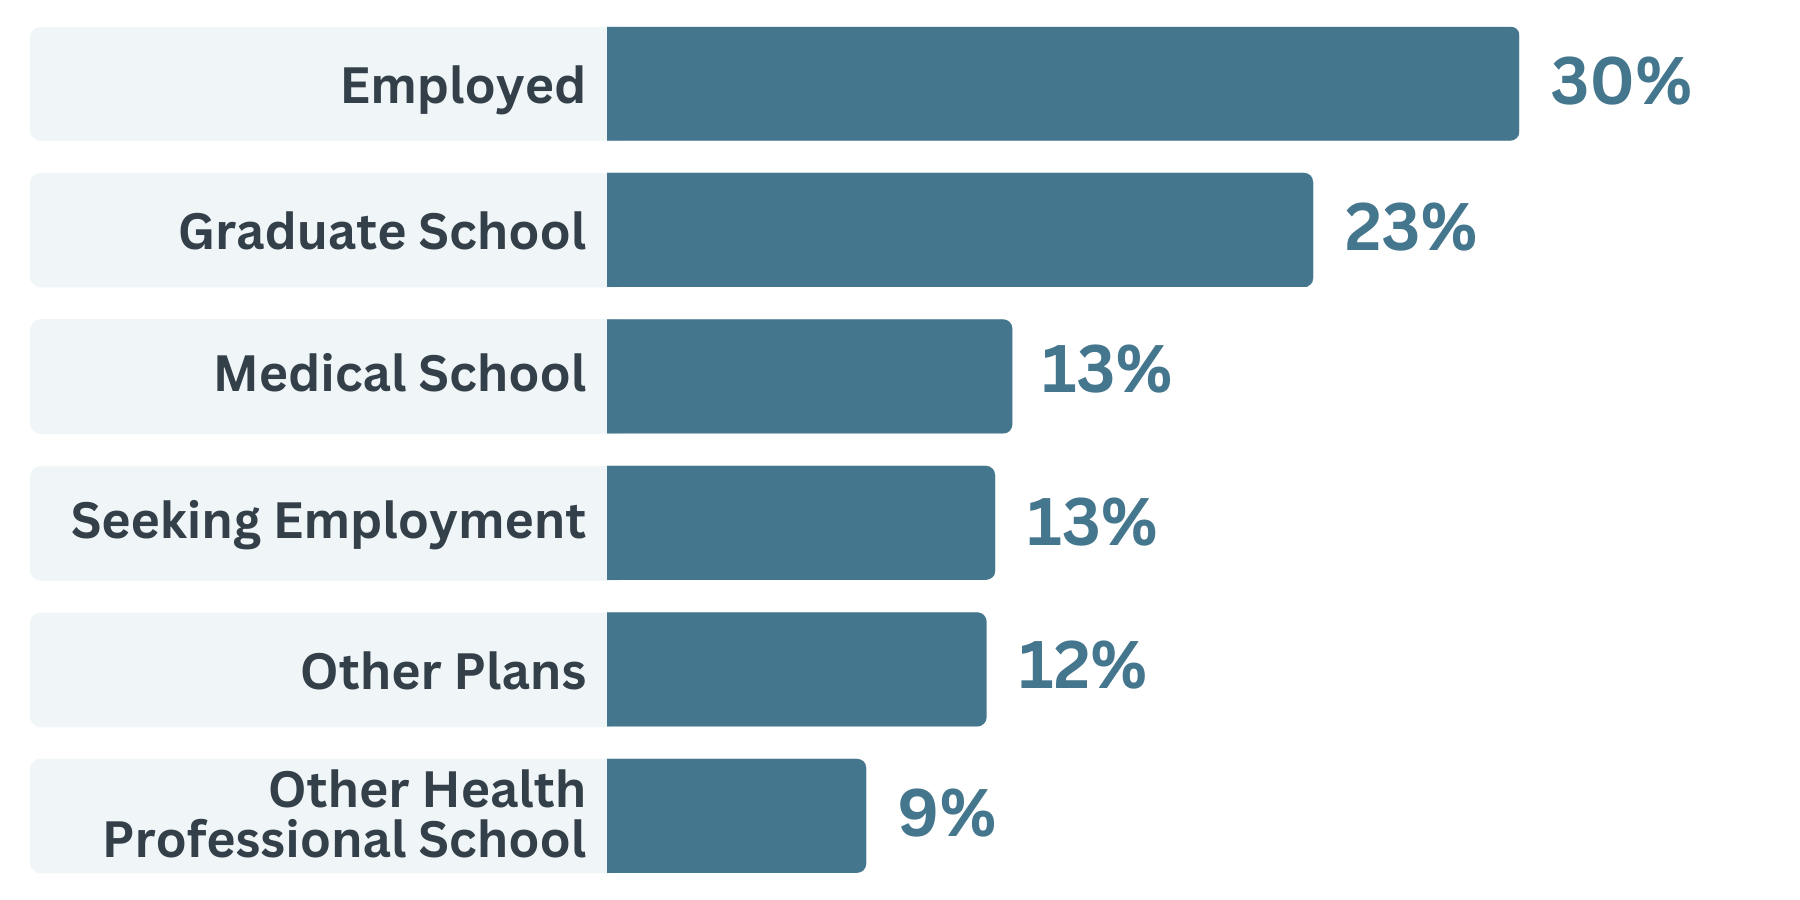 public health data: employed 30%, graduate school 23%, medical school 13%, seeking employment 13%, other plans 12%, other health professional school 9%